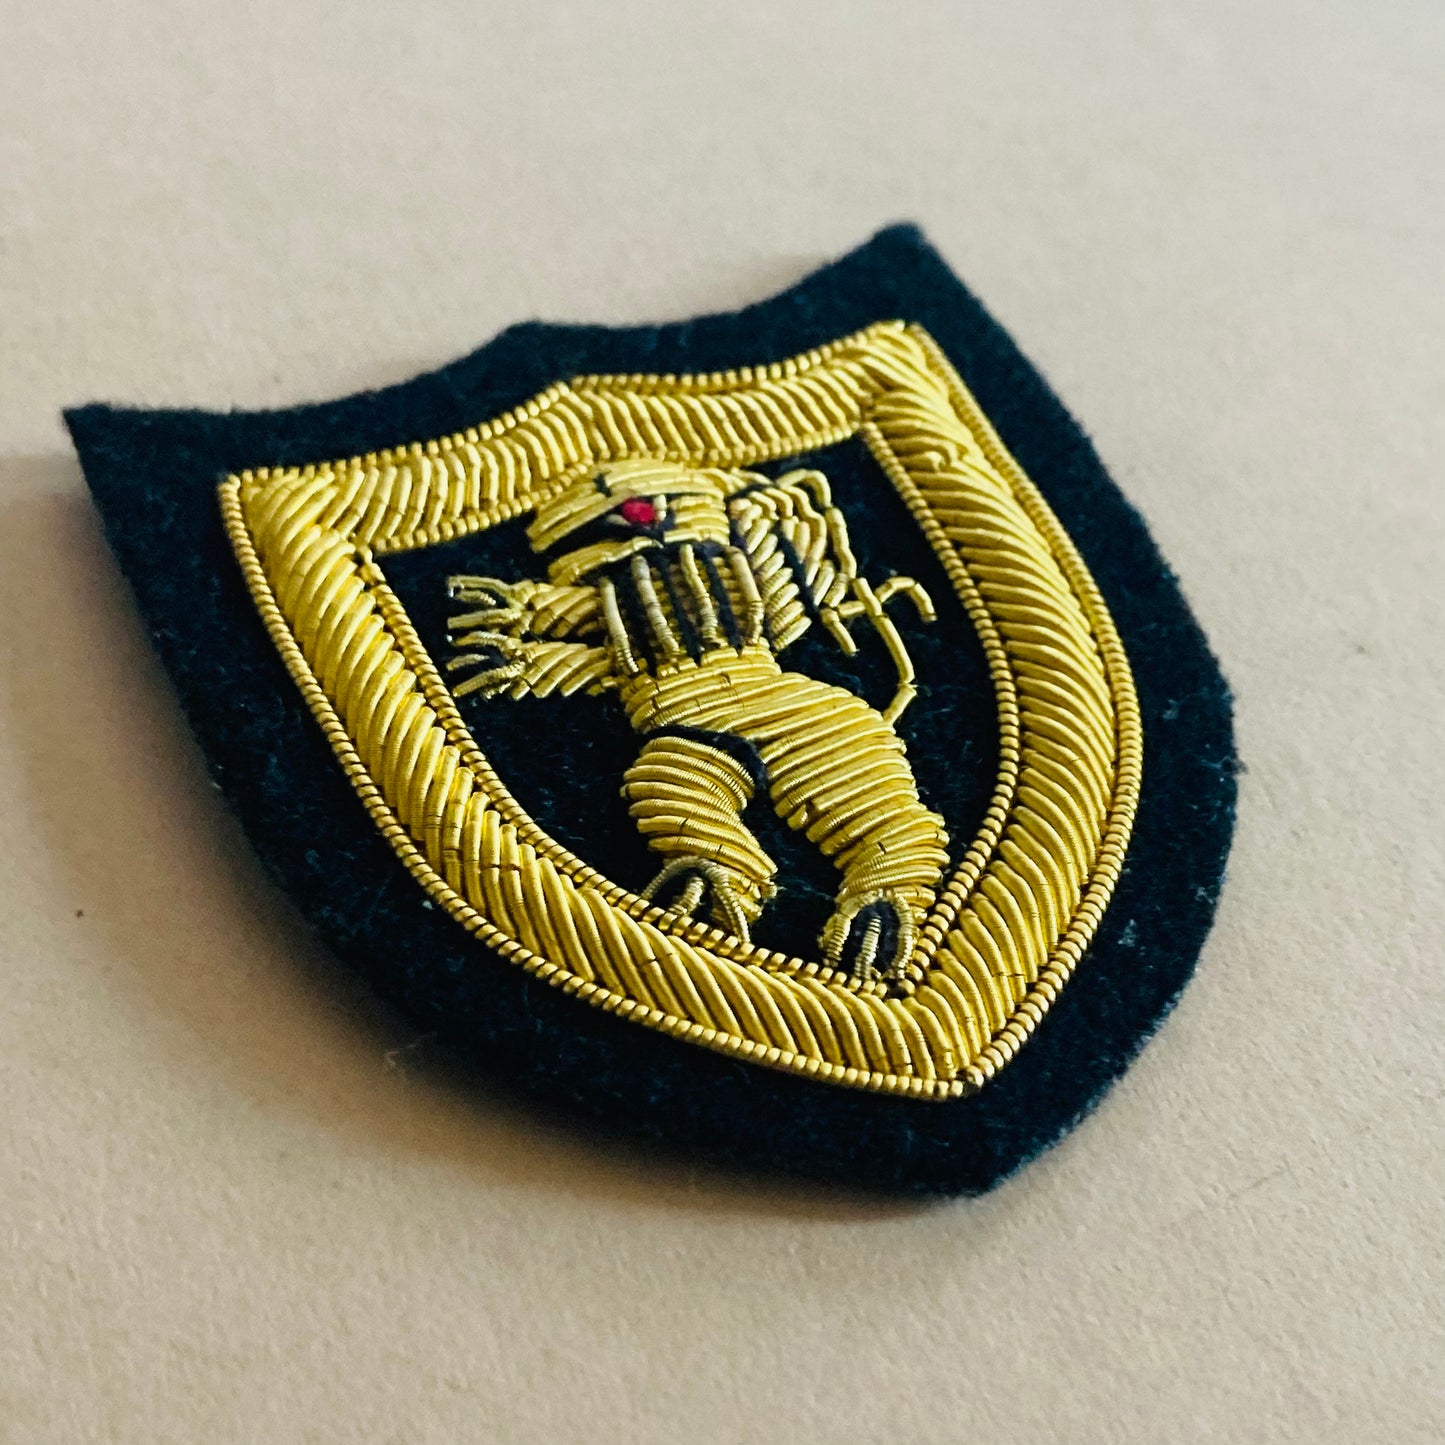 Vintage Royal Military Textiles Badges